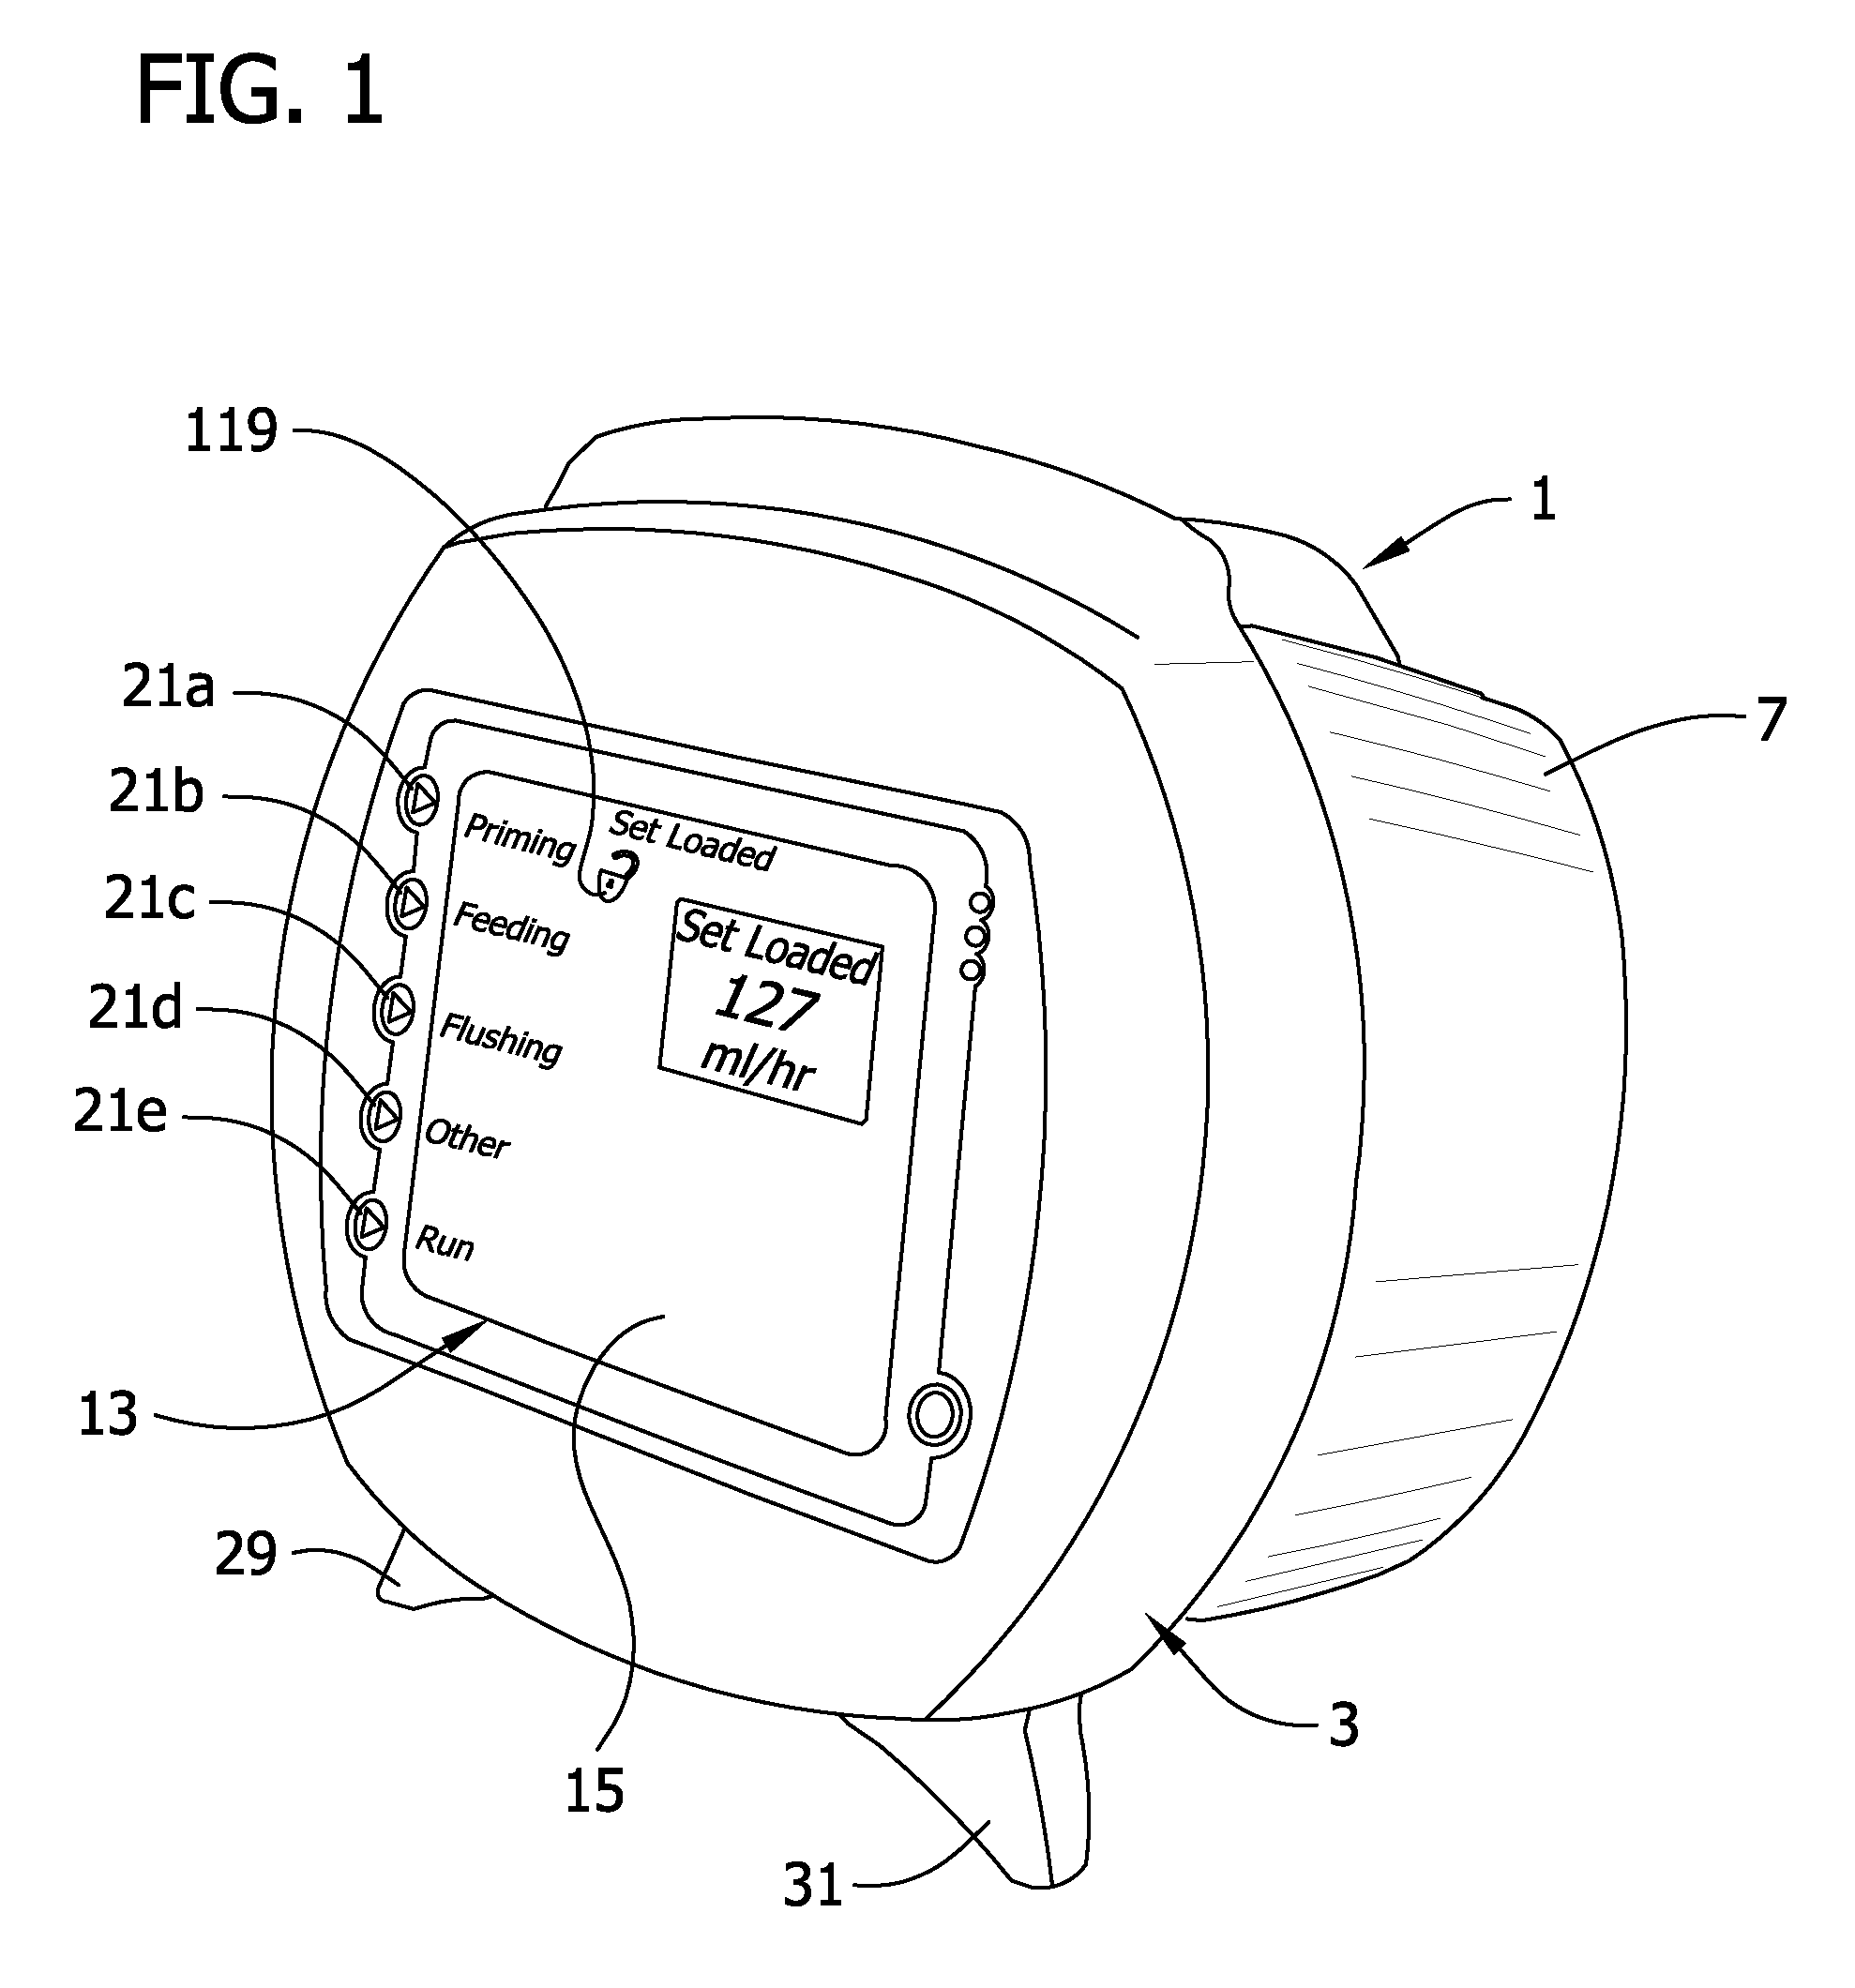 Fluid detection in an enteral feeding set